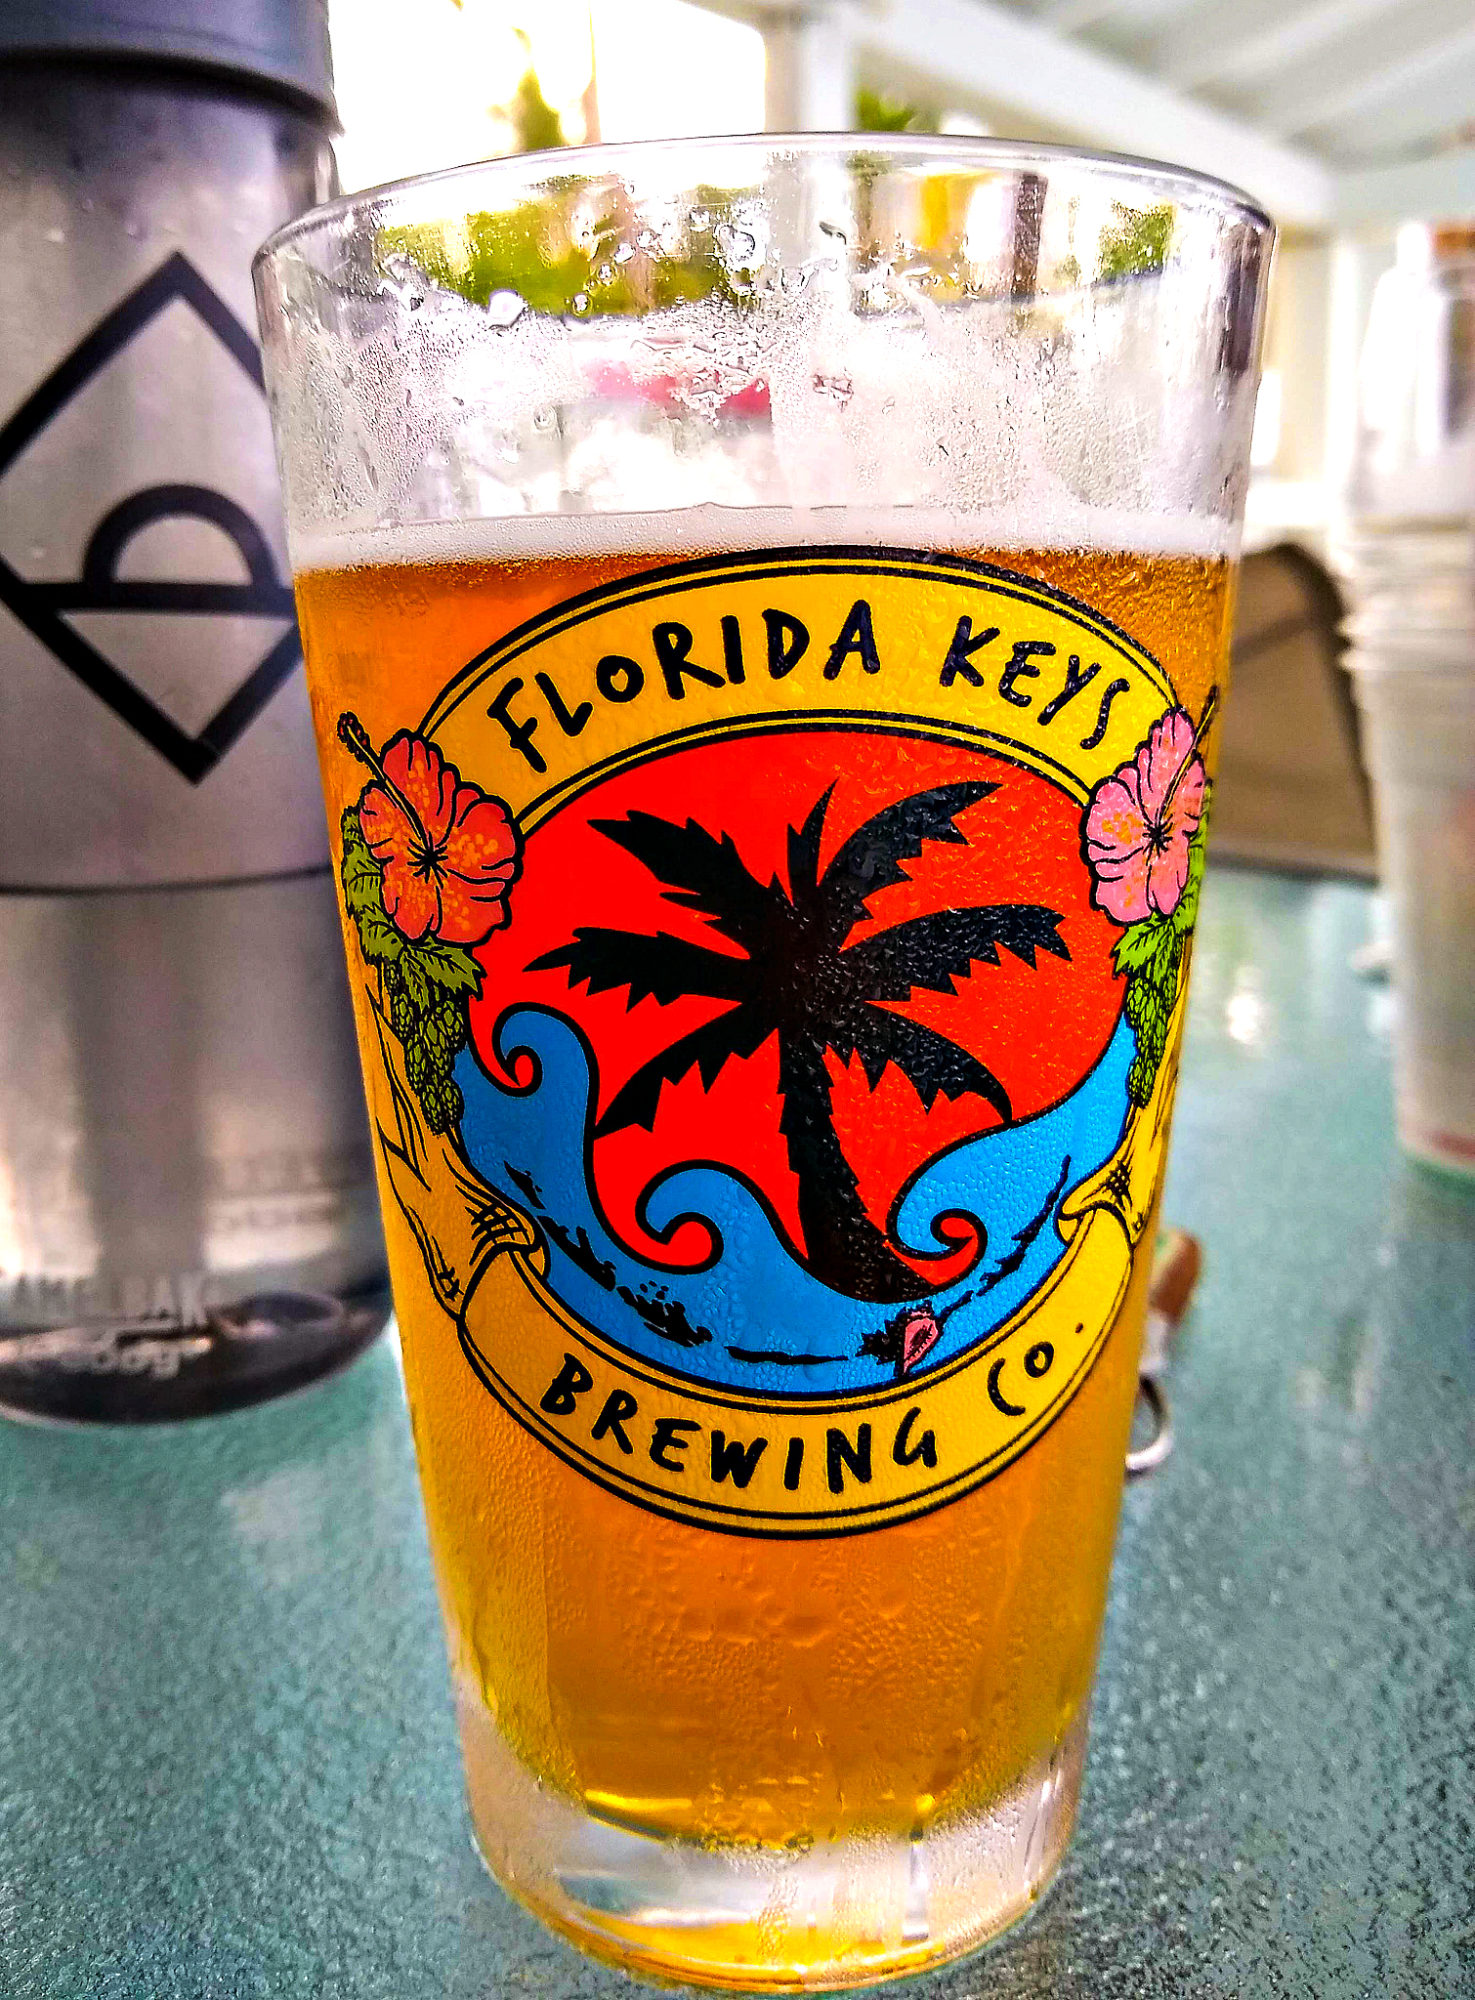 Florida Keys Brewing